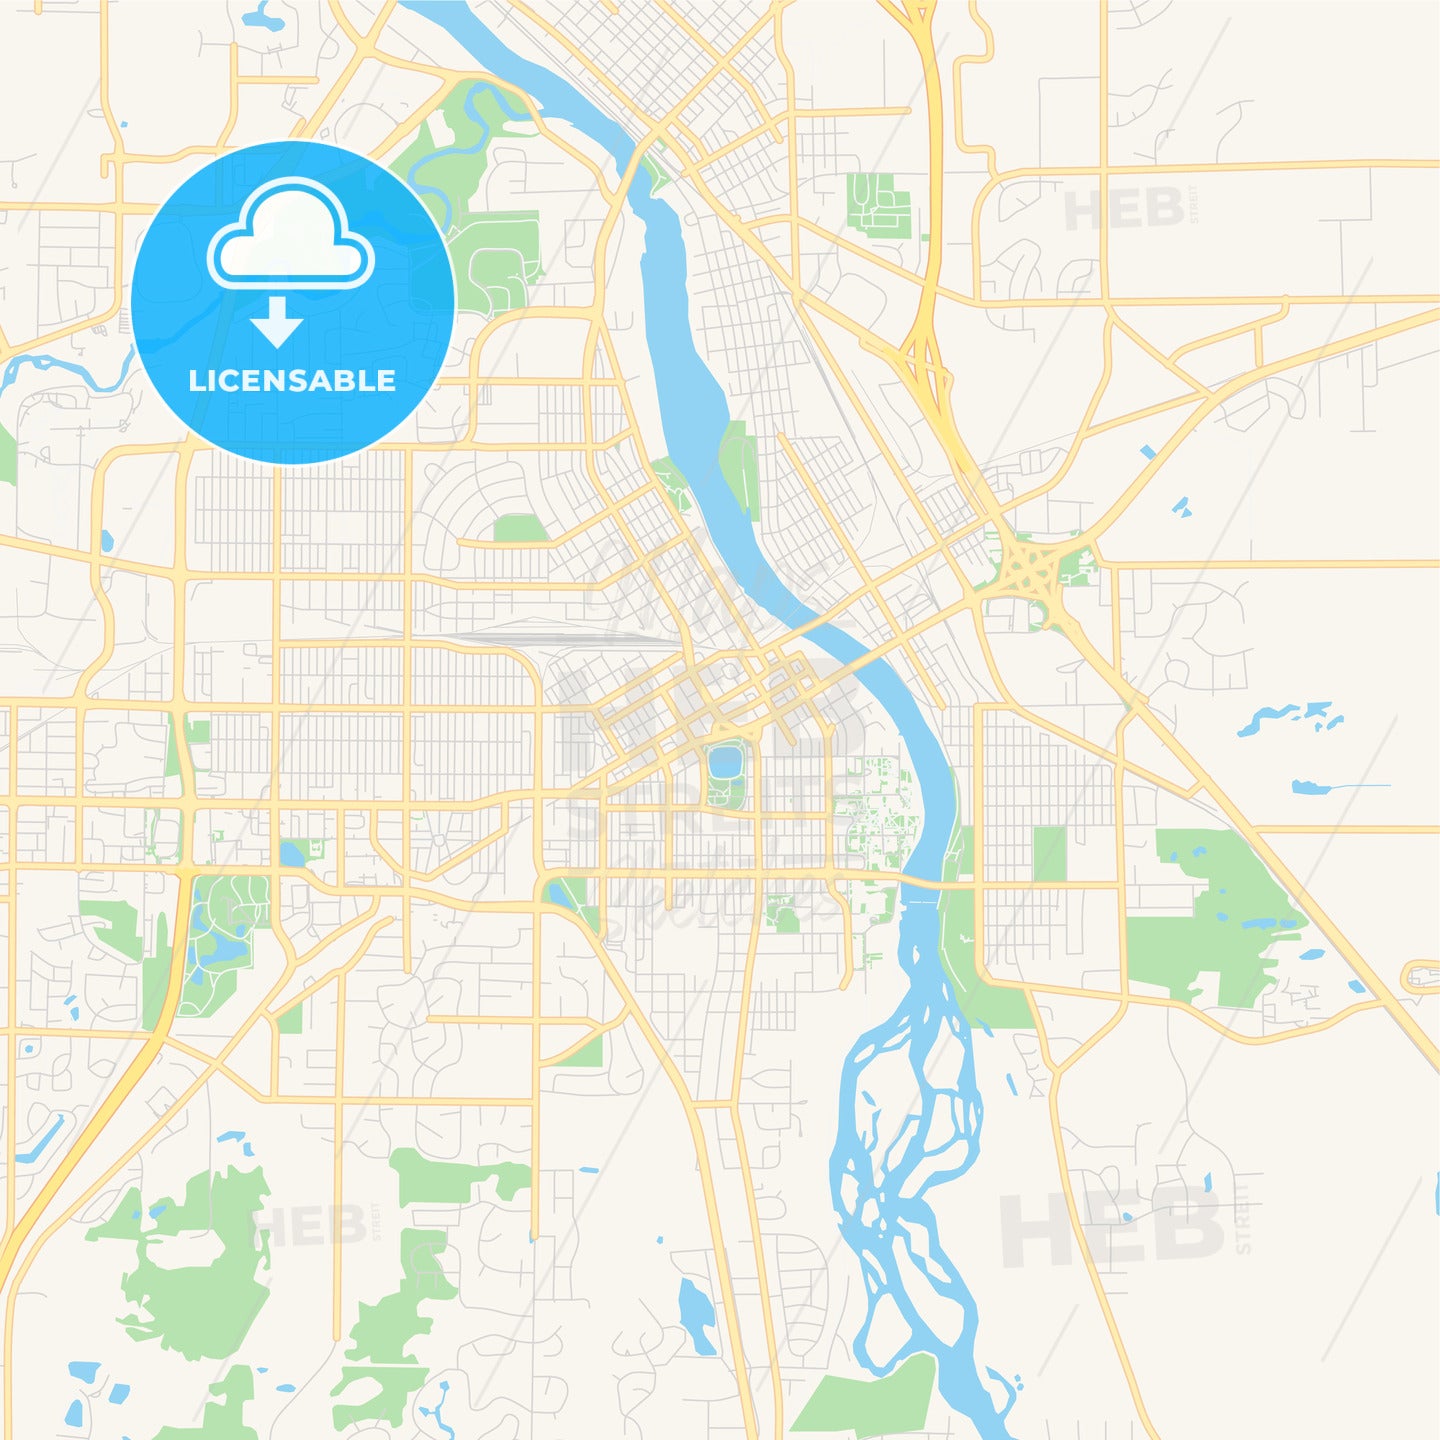 Empty vector map of St. Cloud, Minnesota, USA